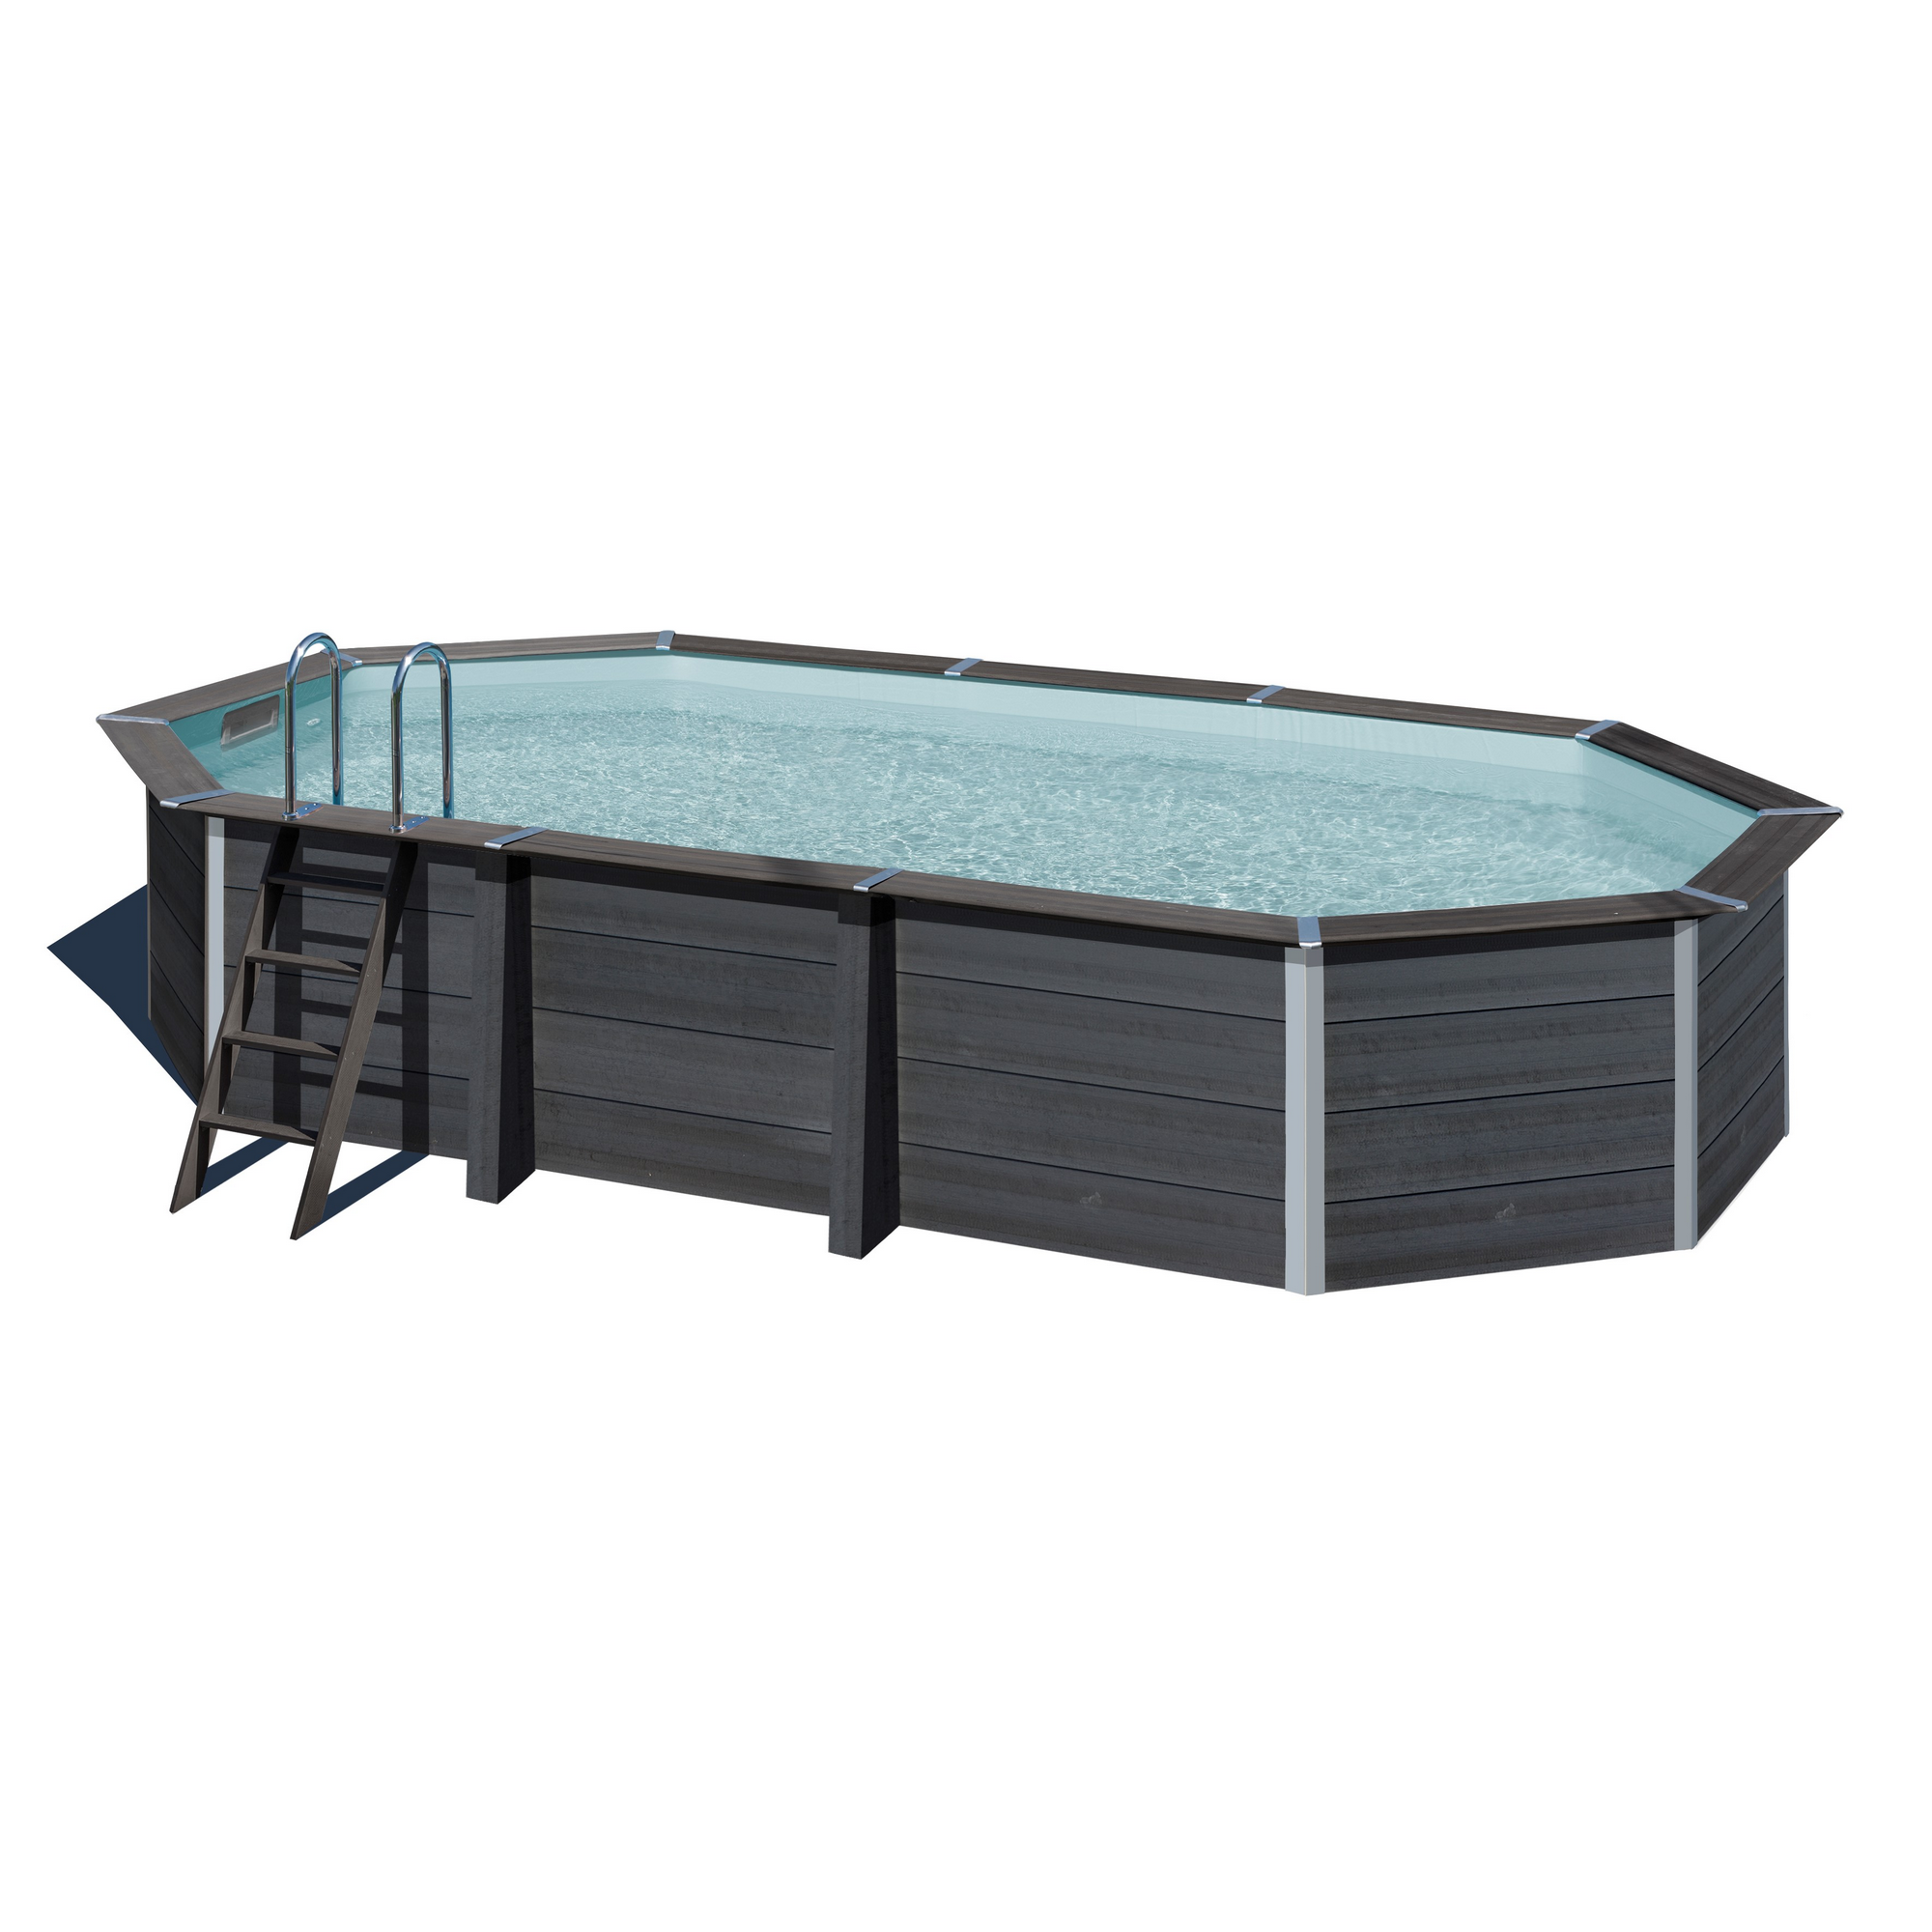 Composite Pool-Set 'Avantgarde' 386 x 124 x 524 cm mit Sandfilter und Trittleiter + product picture